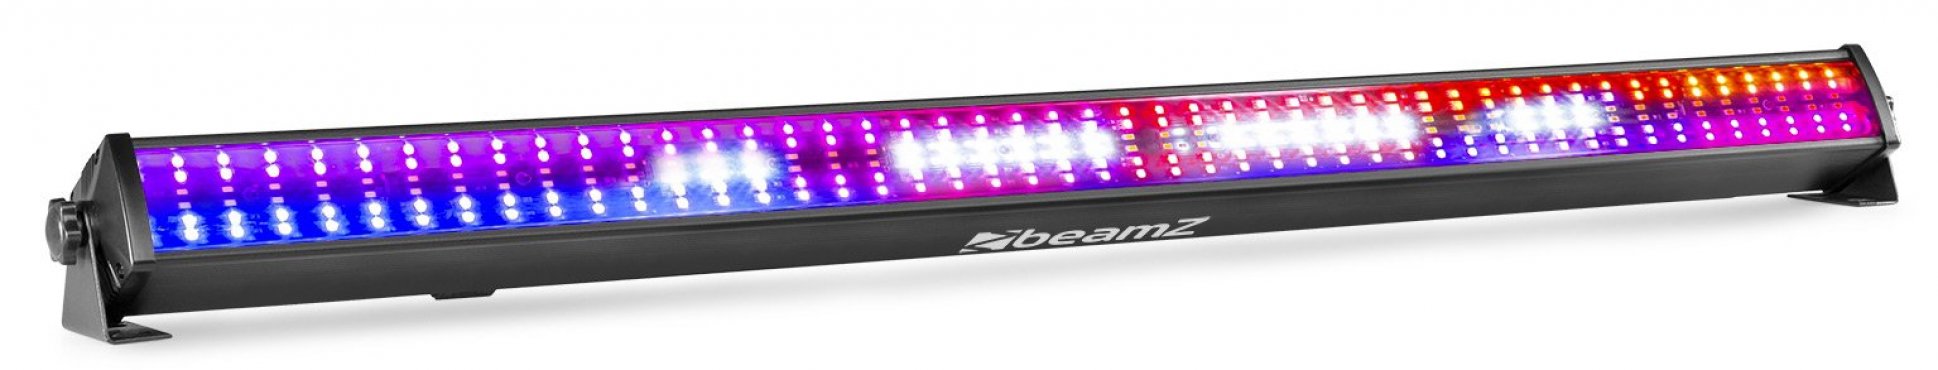 BeamZ CB288 LED Bar Wash and Strobe RGB+W